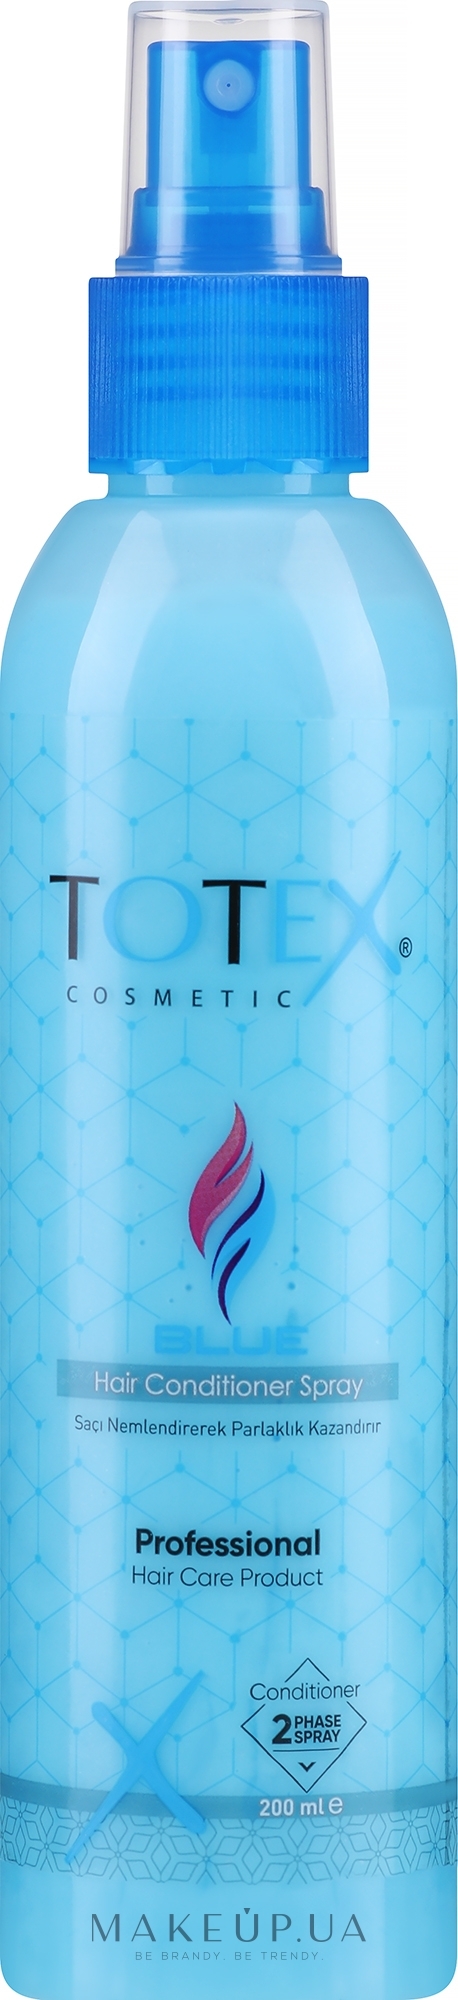 Двухфазный спрей-кондиционер для волос - Totex Cosmetic Blue Hair Conditioner Spray — фото 200ml